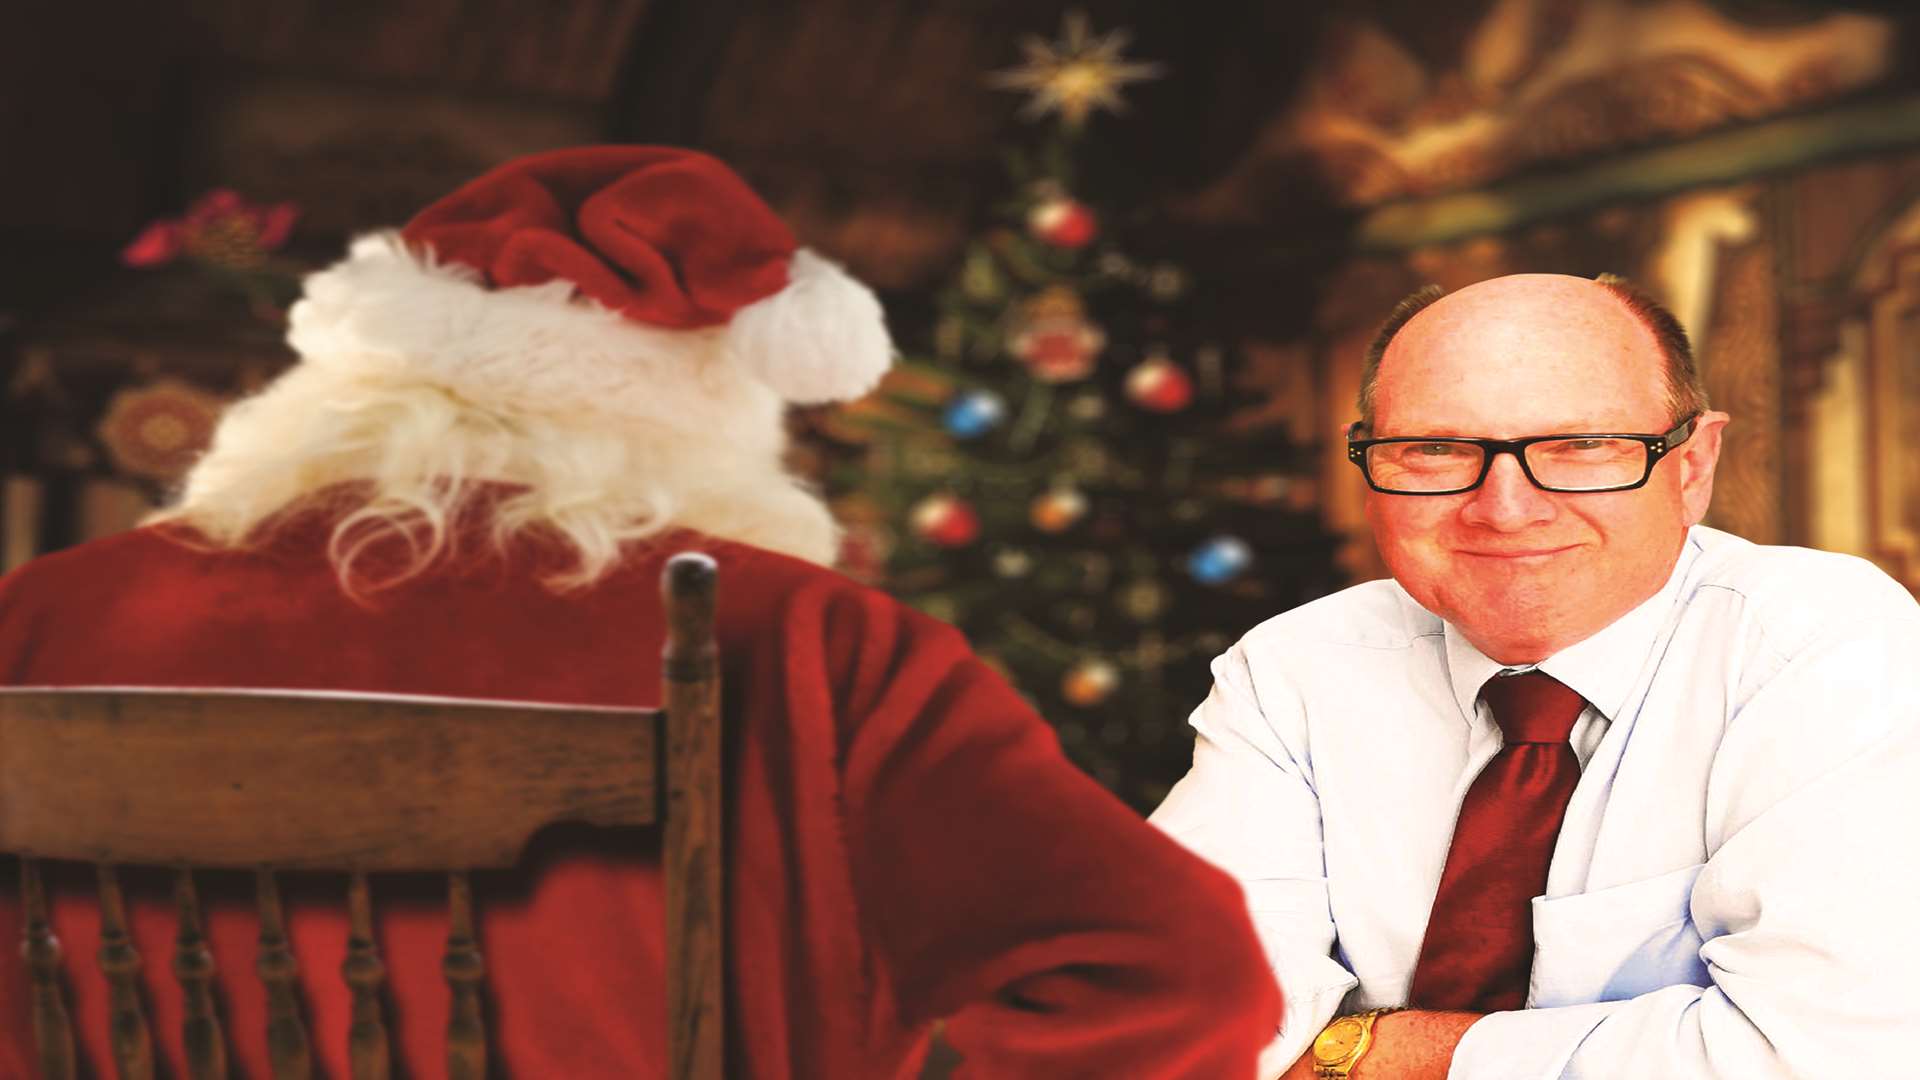 Reporter John Nurden interviewed Santa Claus